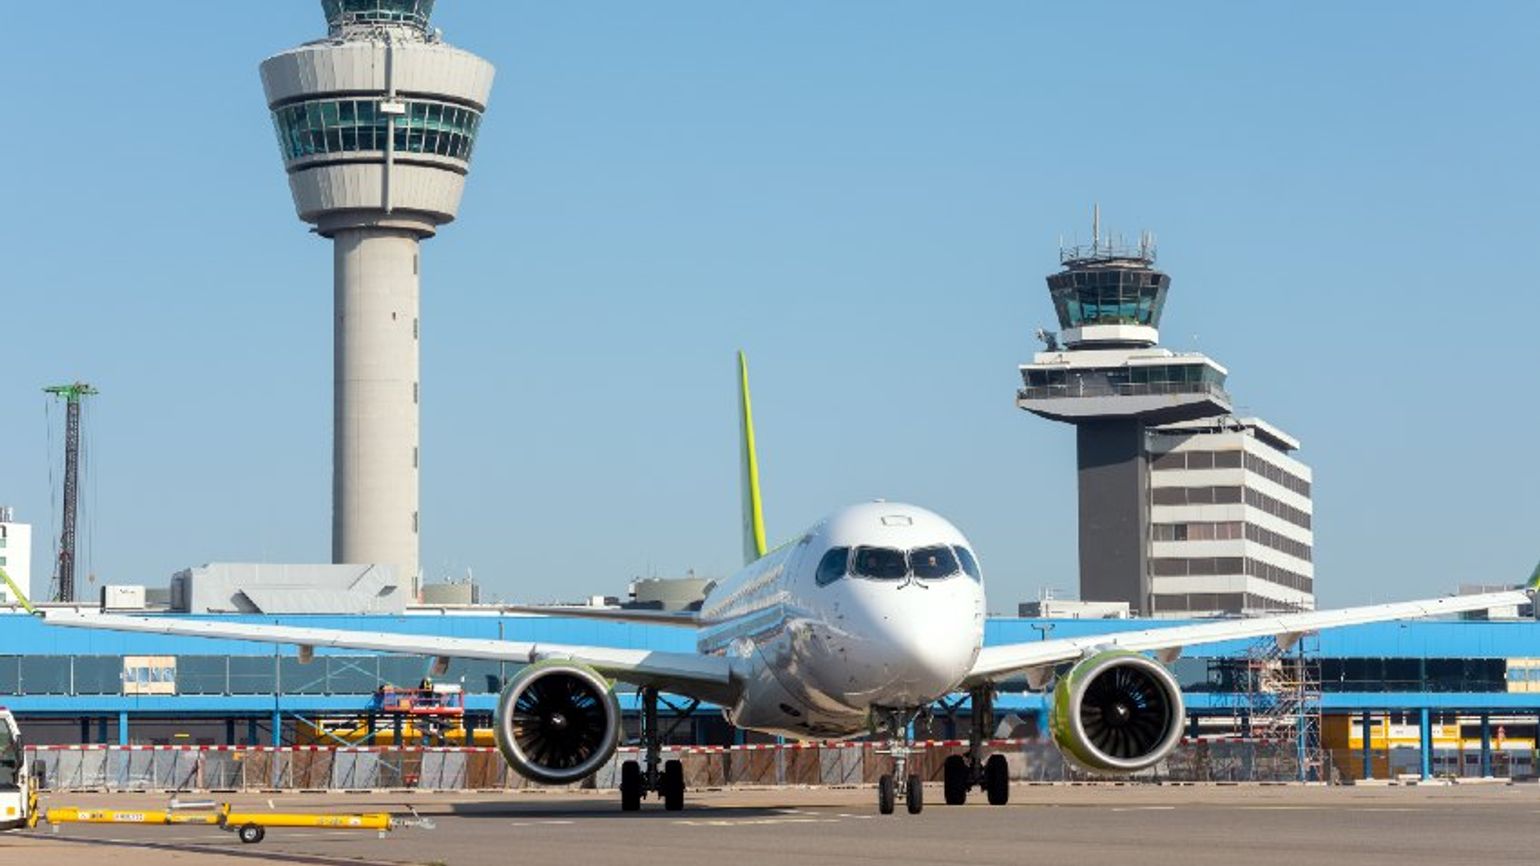 Schiphol airport appeal against flight cut